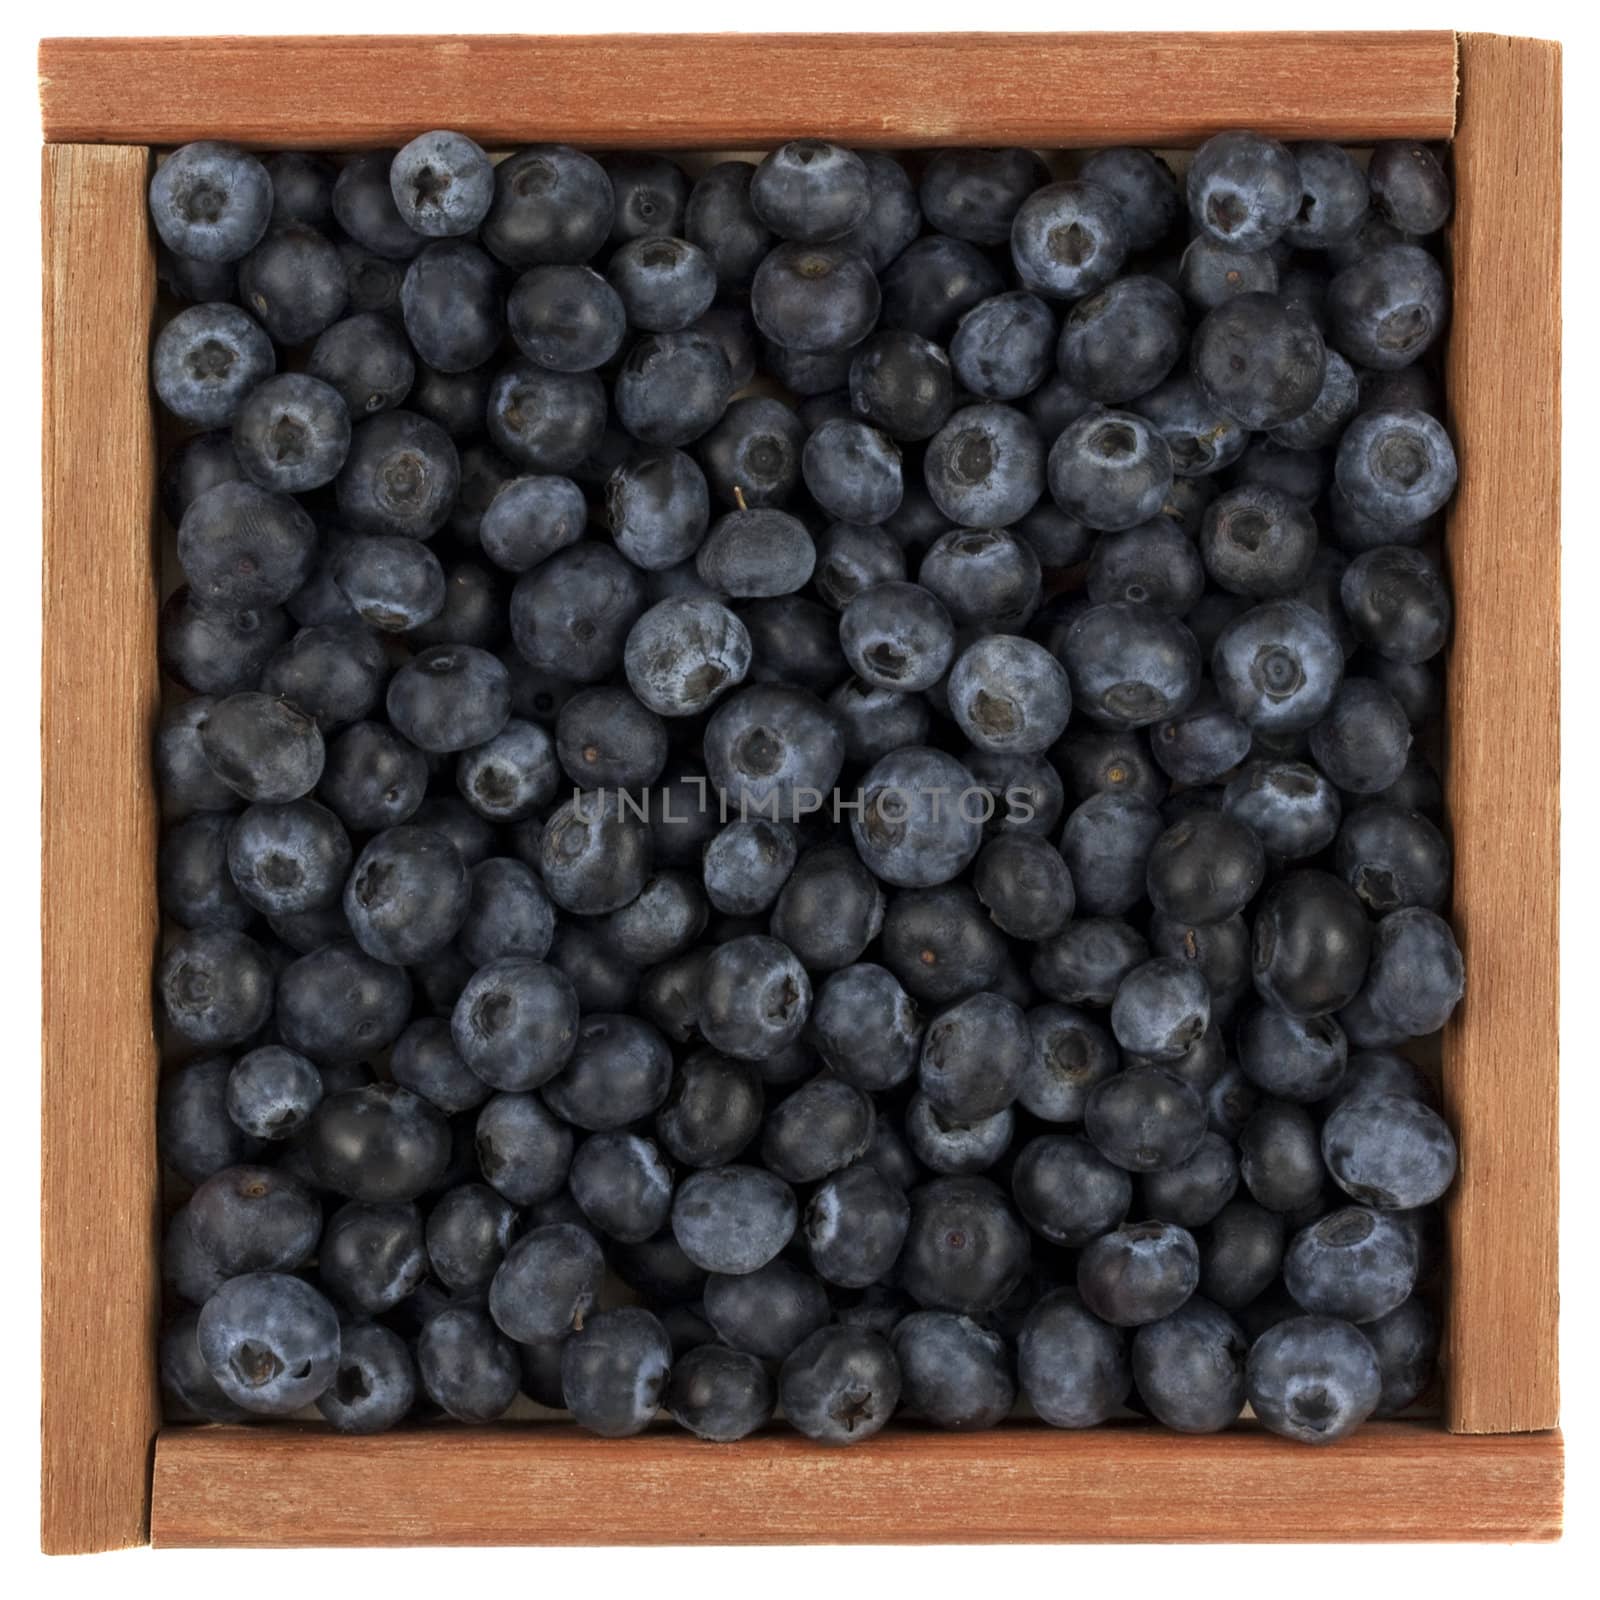 blueberries in wooden box by PixelsAway